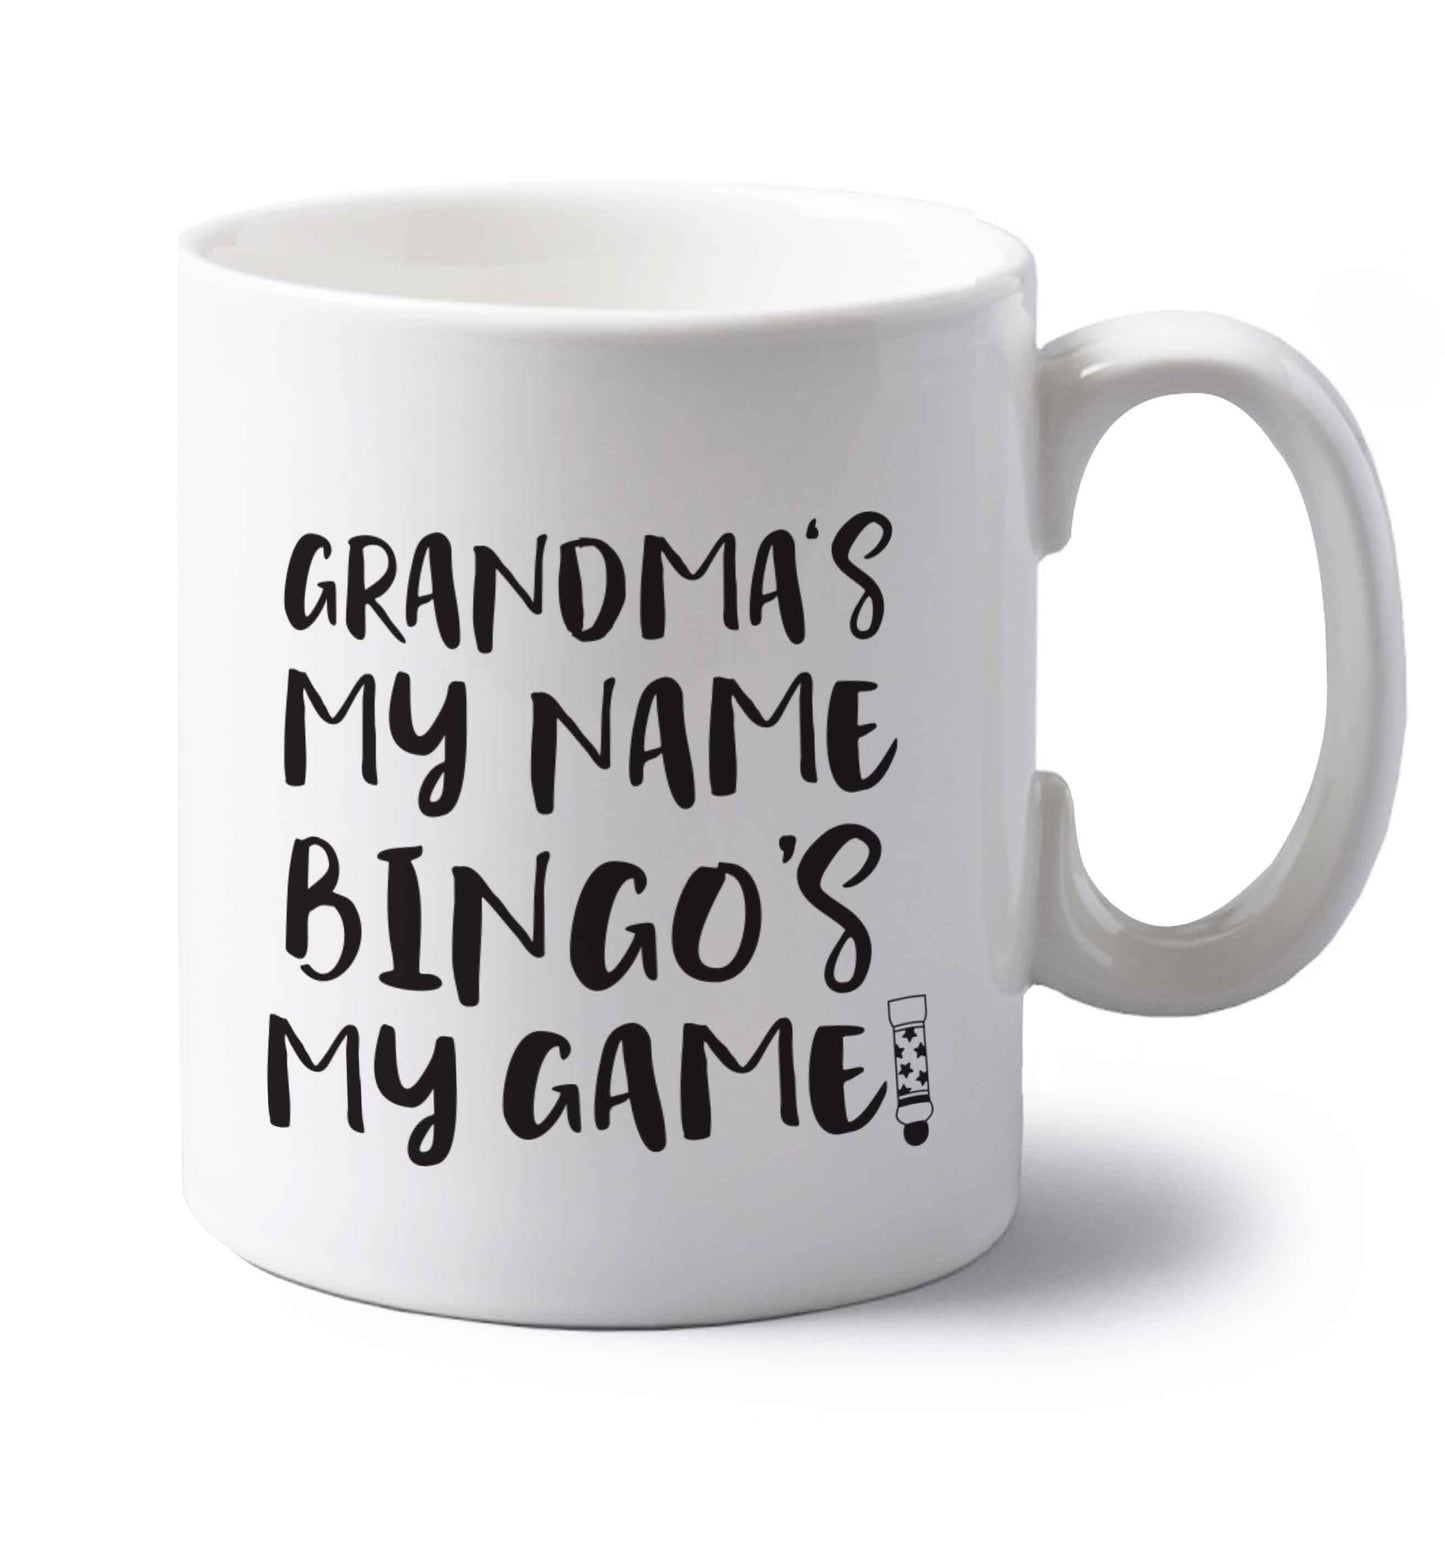 Grandma's my name bingo's my game! left handed white ceramic mug 